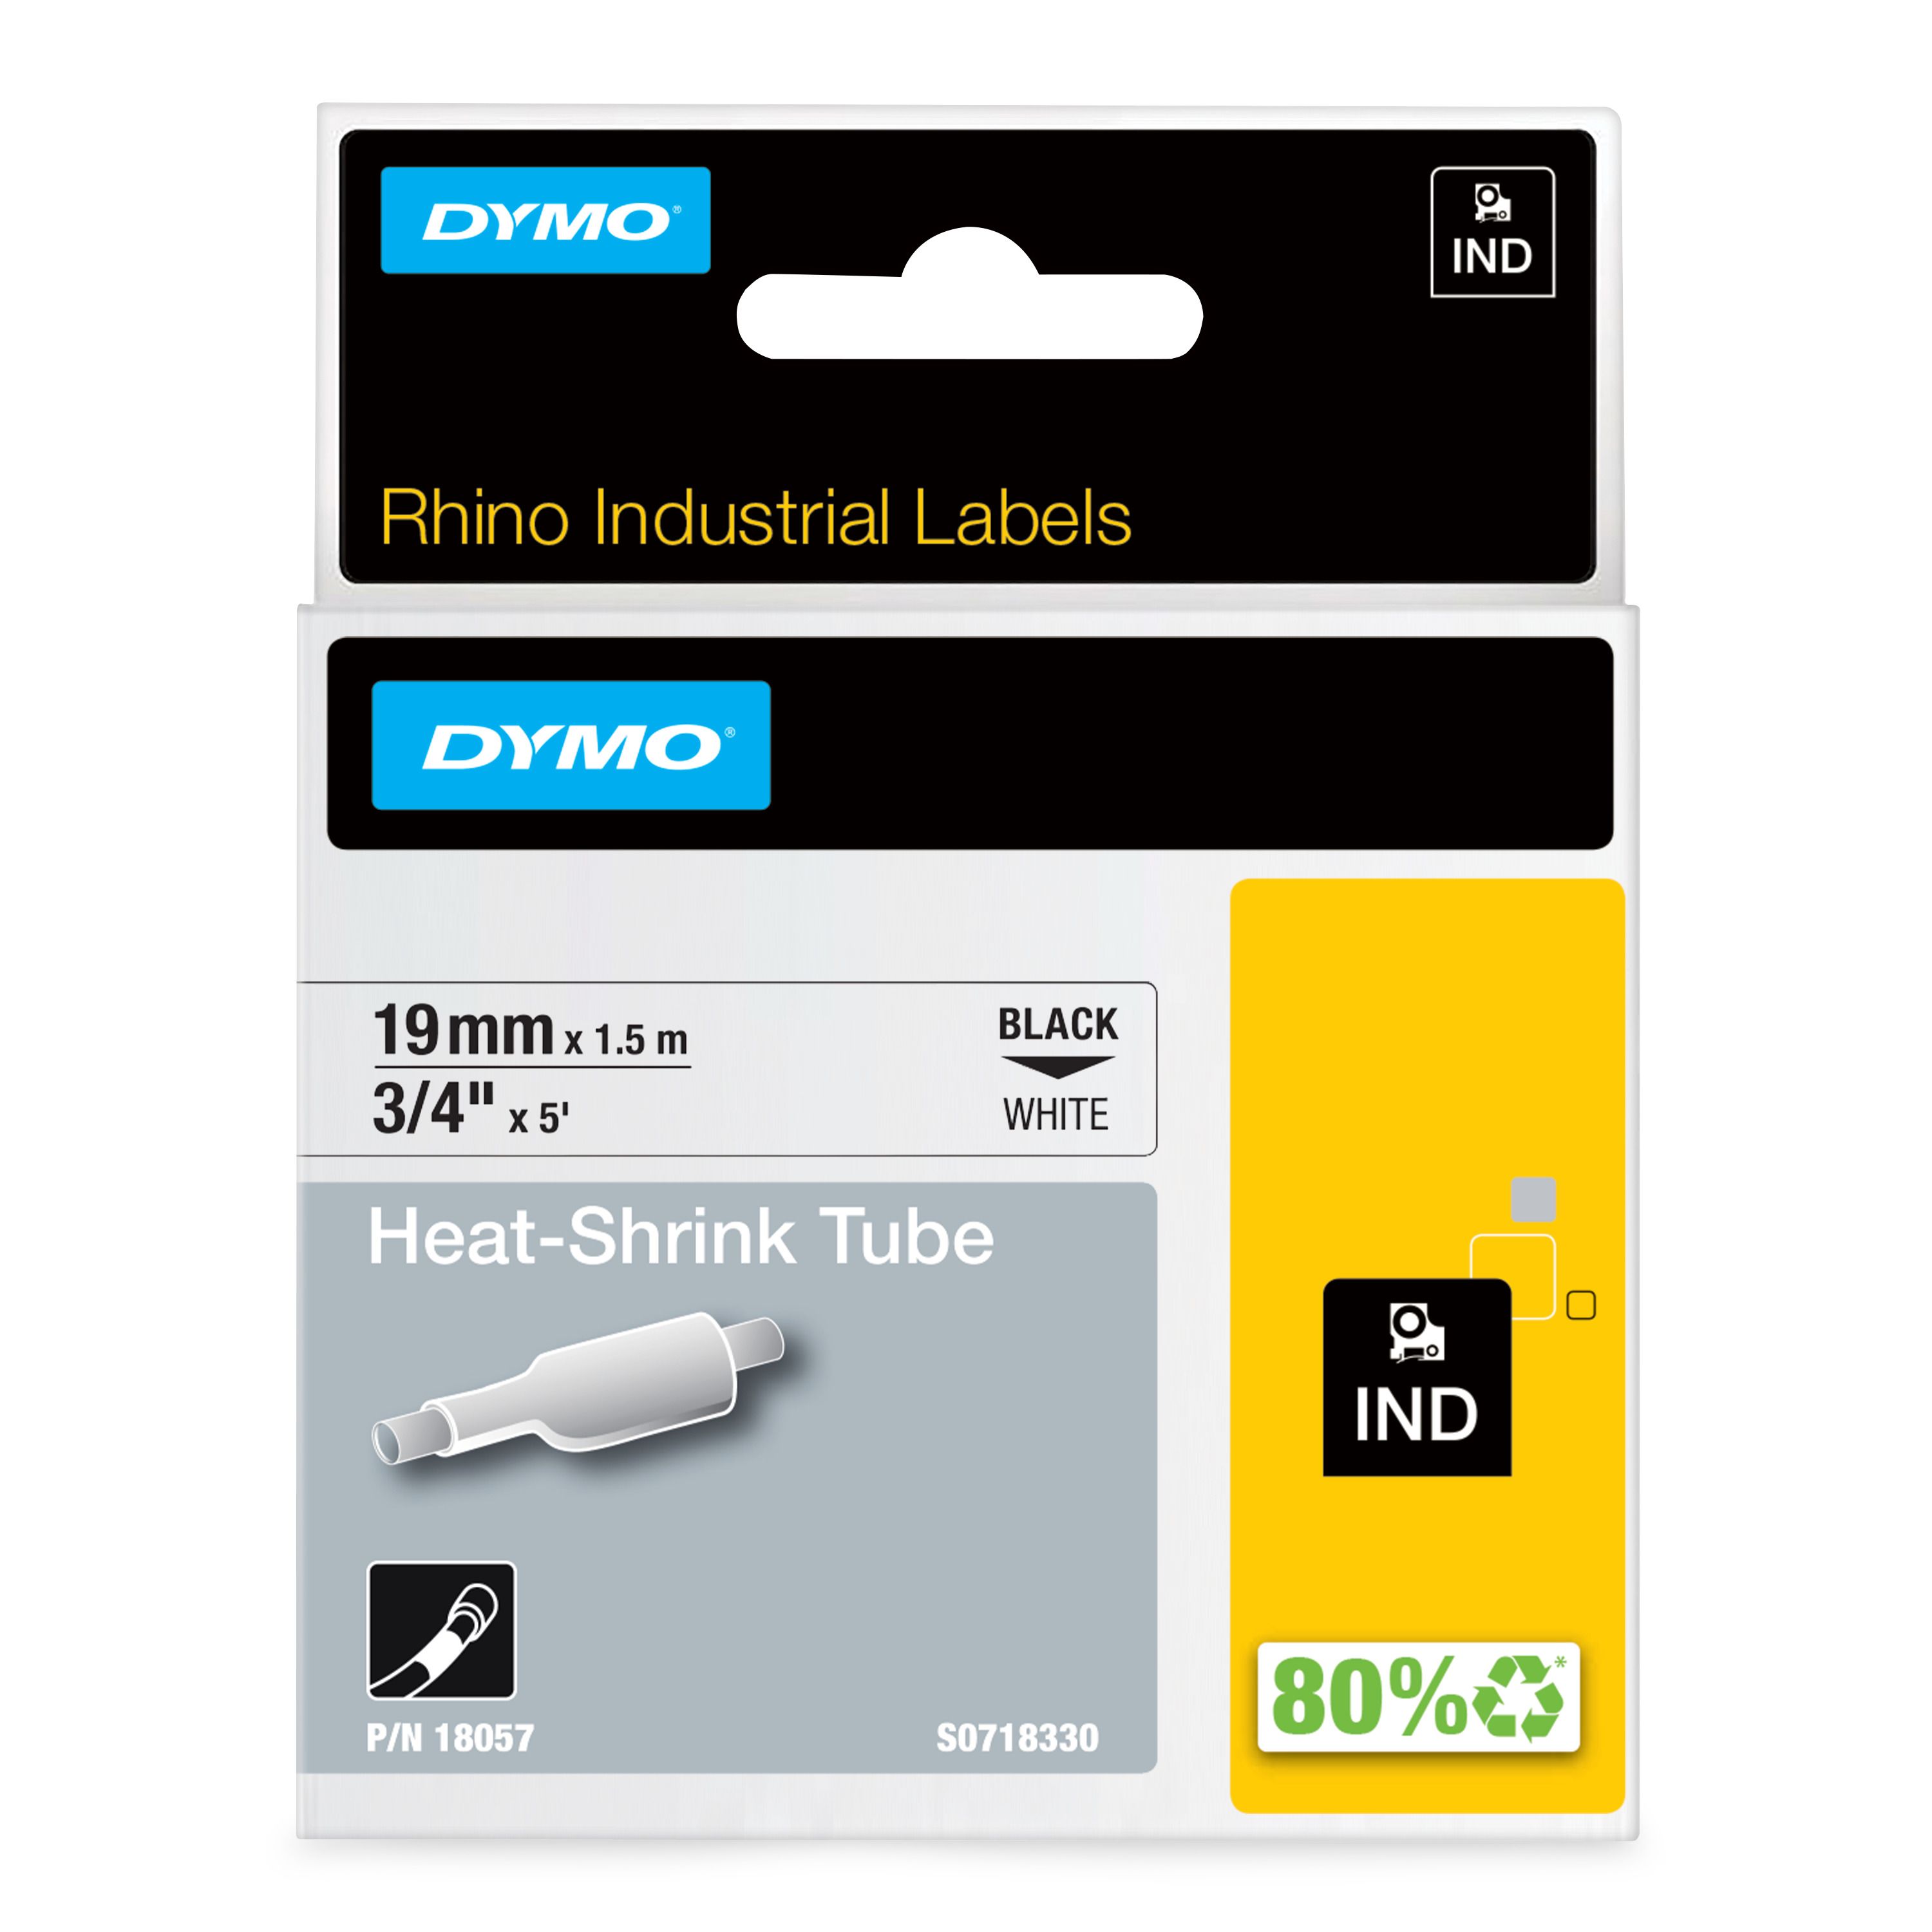 Dymo Heat Shrink Tubing, White 19mm Sleeve Dia. x 1.5m Length 3:1 Ratio, DYMO Series